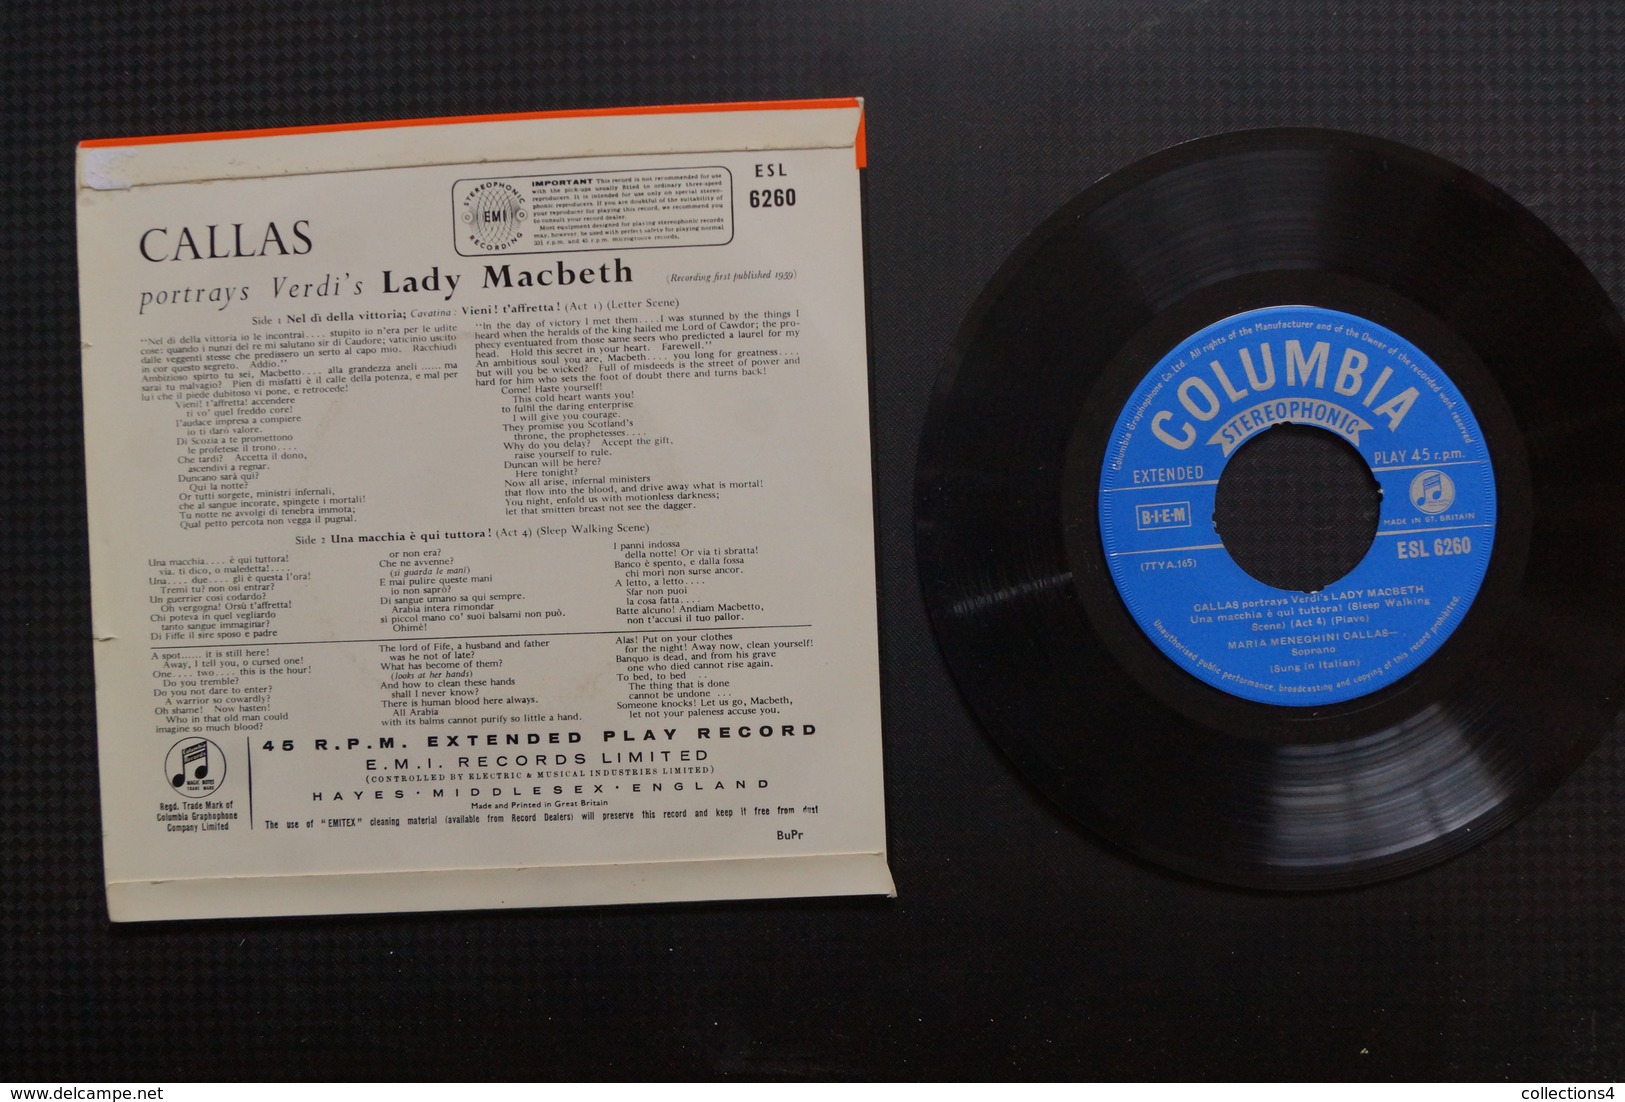 (MARIA) CALLAS PORTRAYS VERDI'S LADY MACBETH EP ANGLAIS DE 1959 - 45 Rpm - Maxi-Single